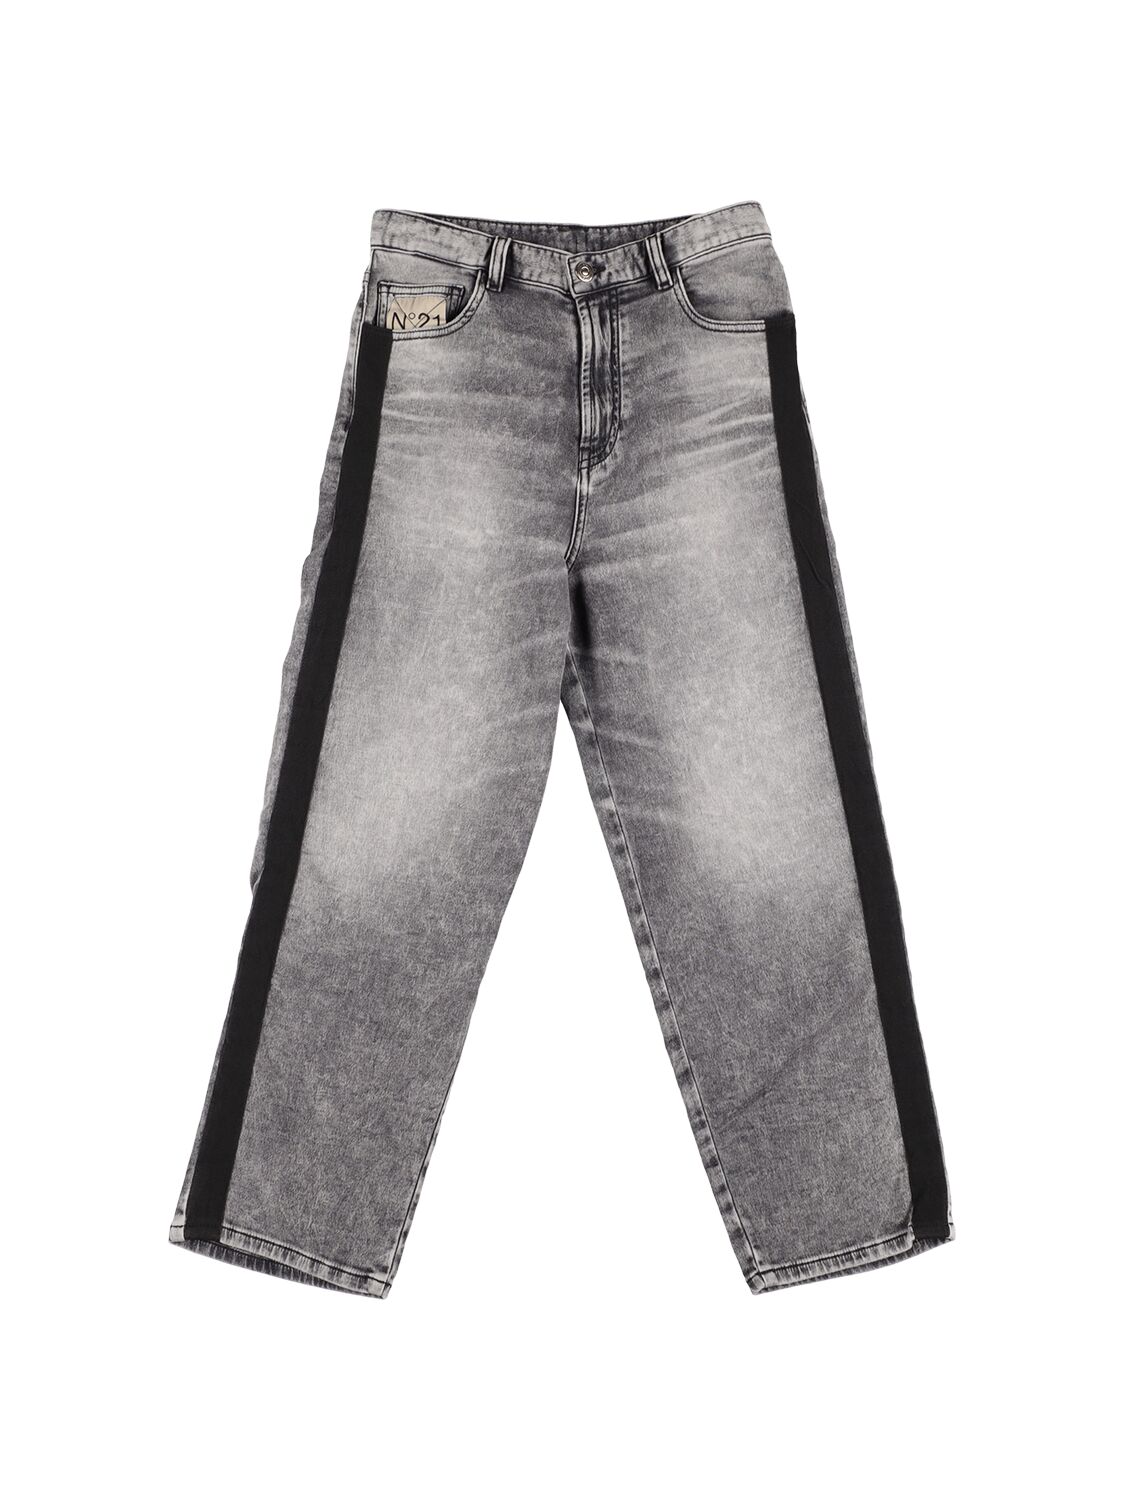 N°21 Kids' Cotton Denim Jeans W/ Side Bands In Black